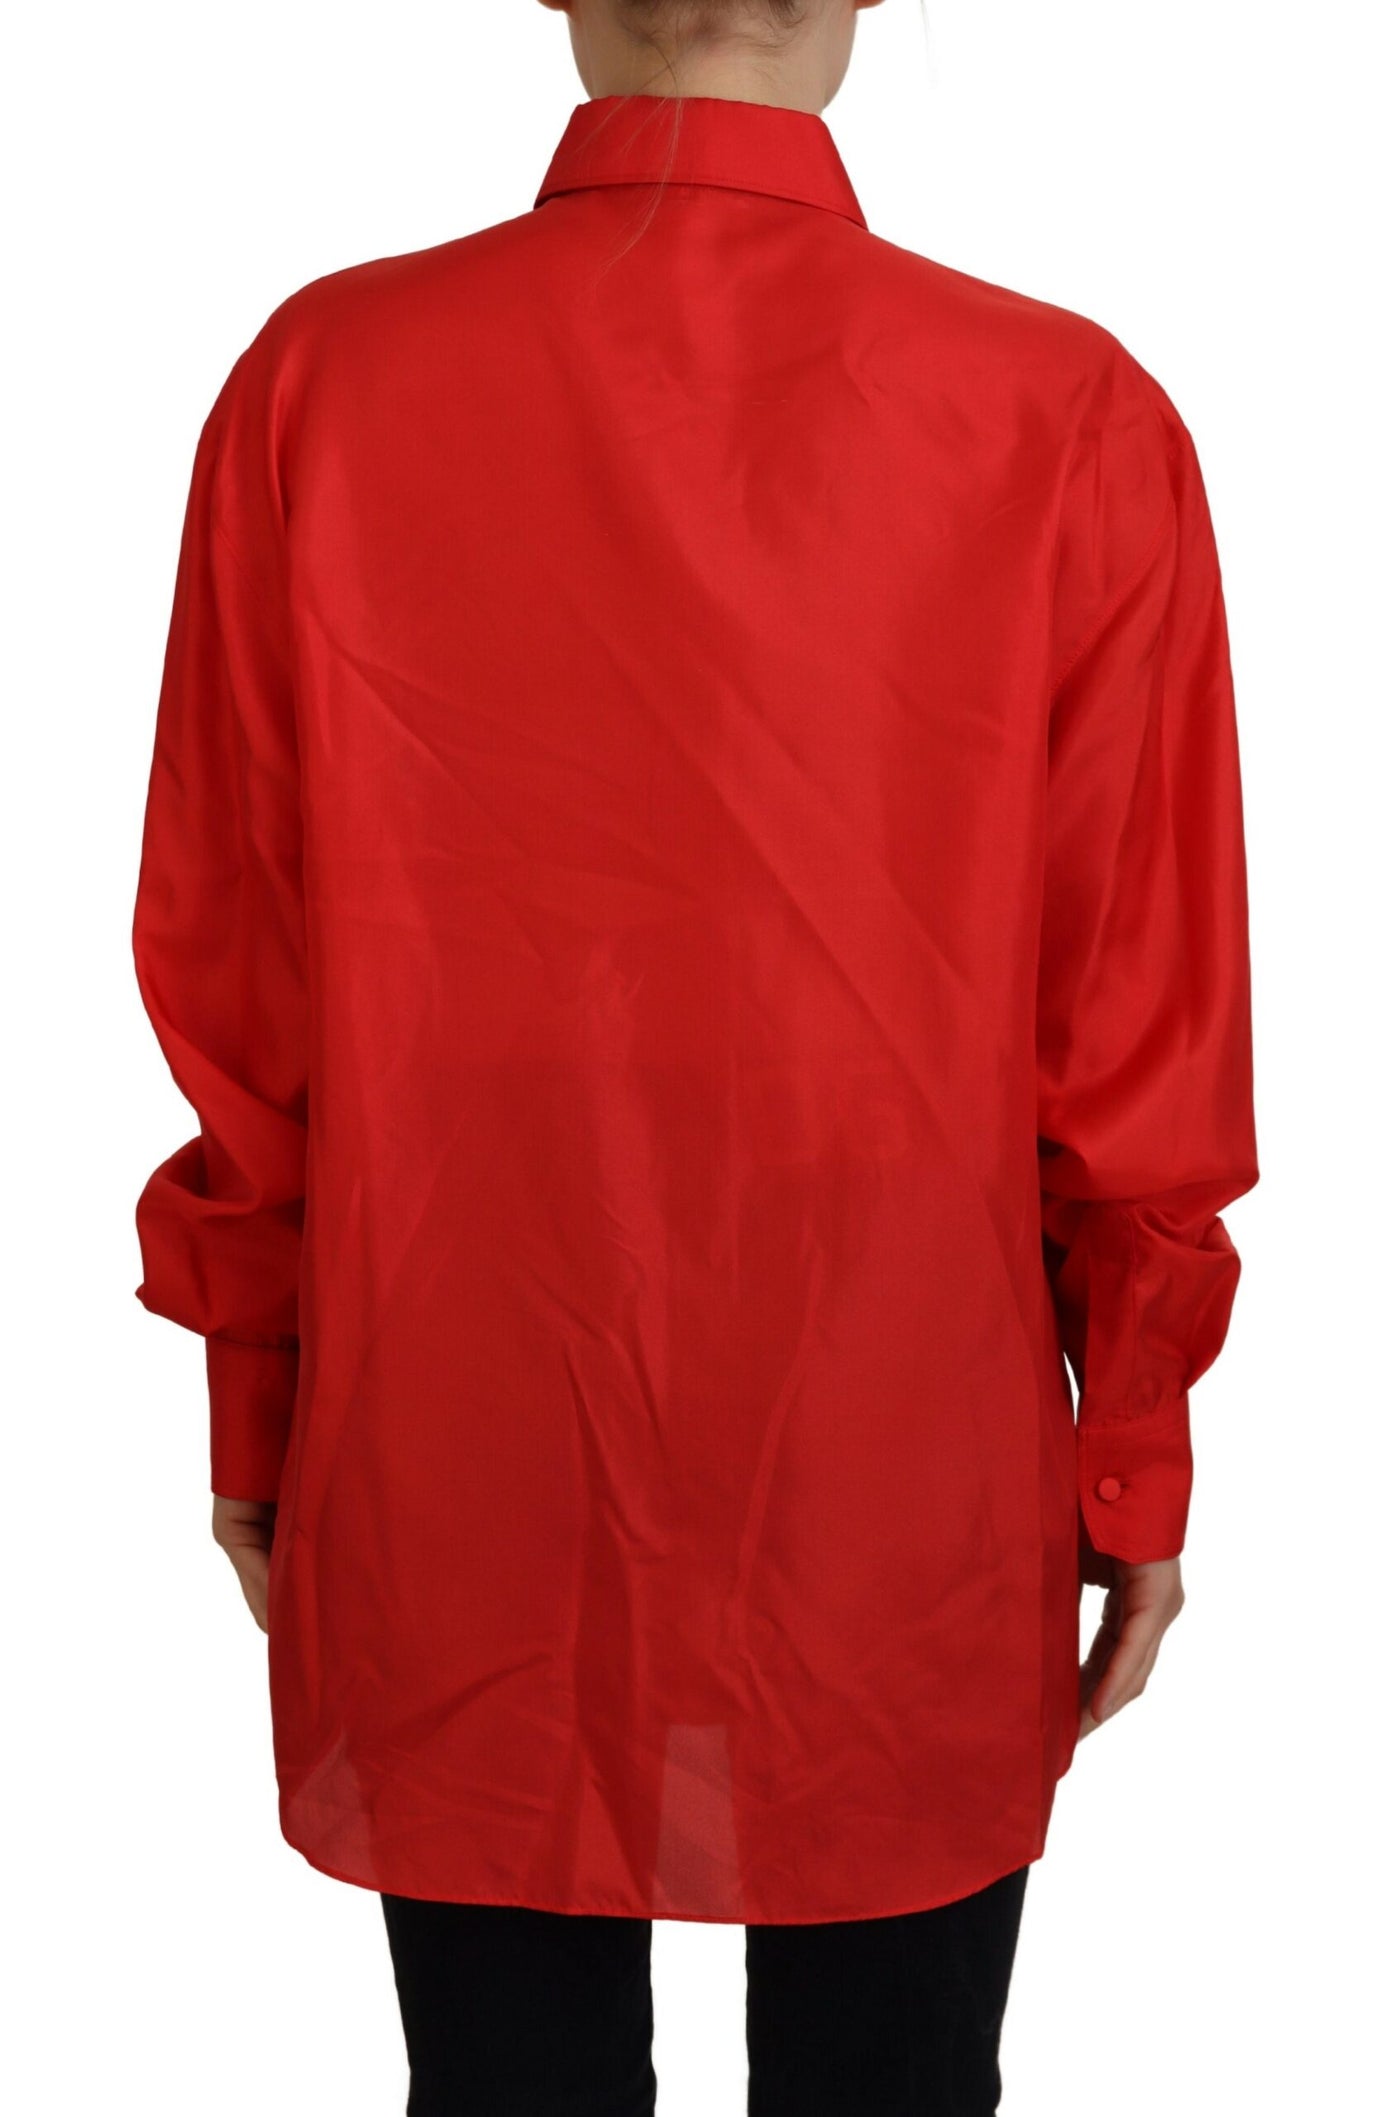 Red Silk Collared Long Sleeves Dress Shirt Top